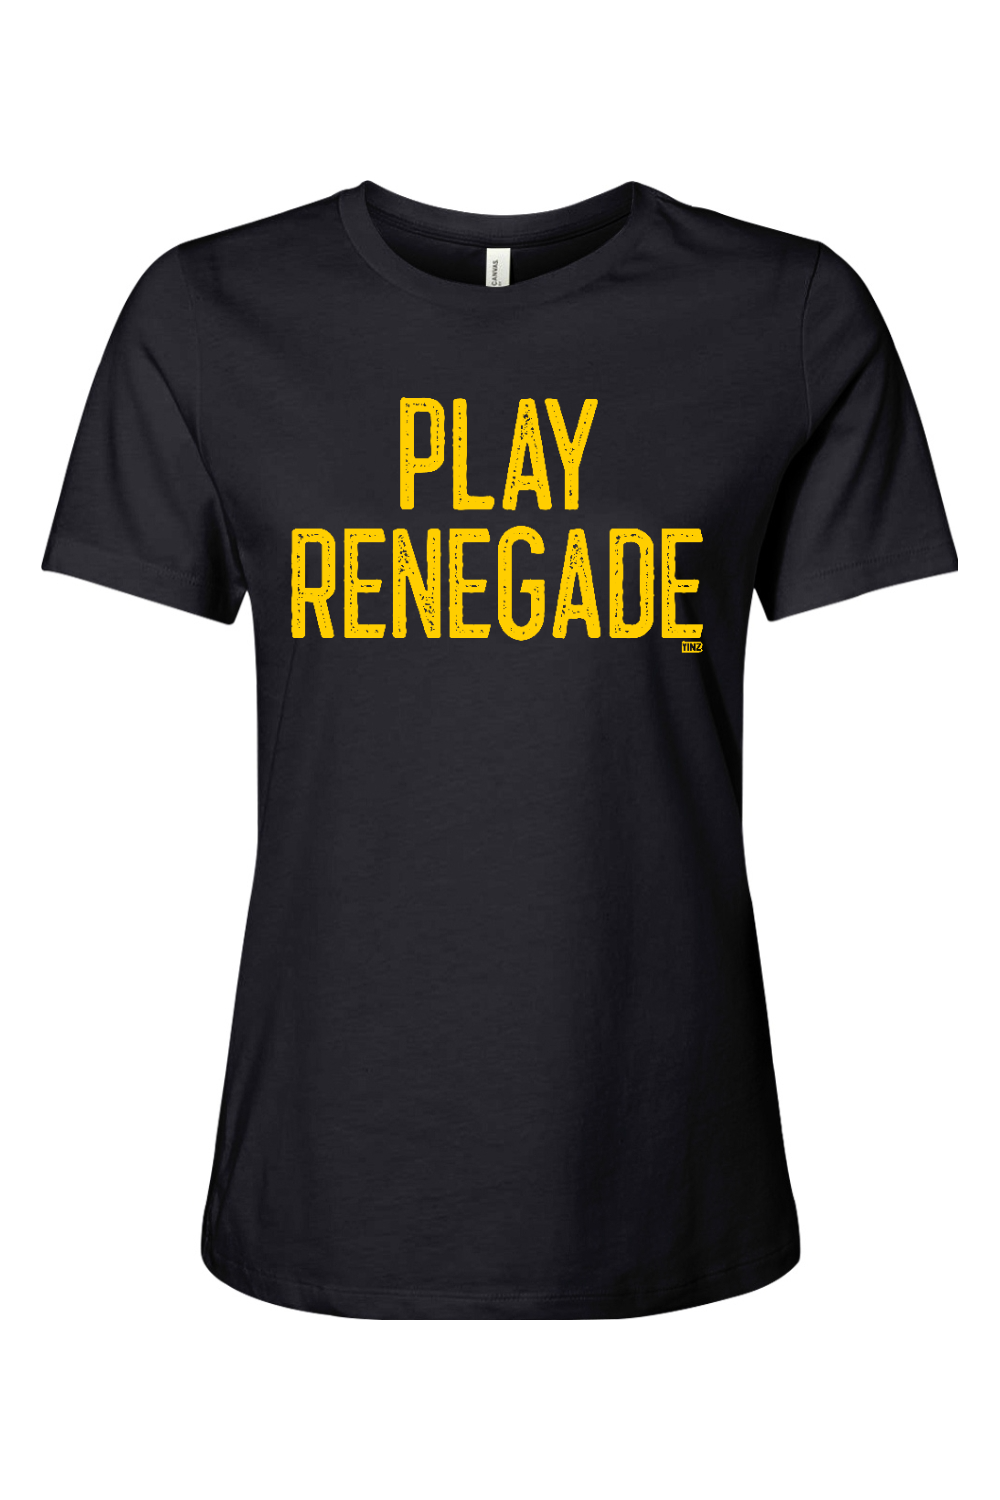 Play Renegade - Ladies Tee - Yinzylvania